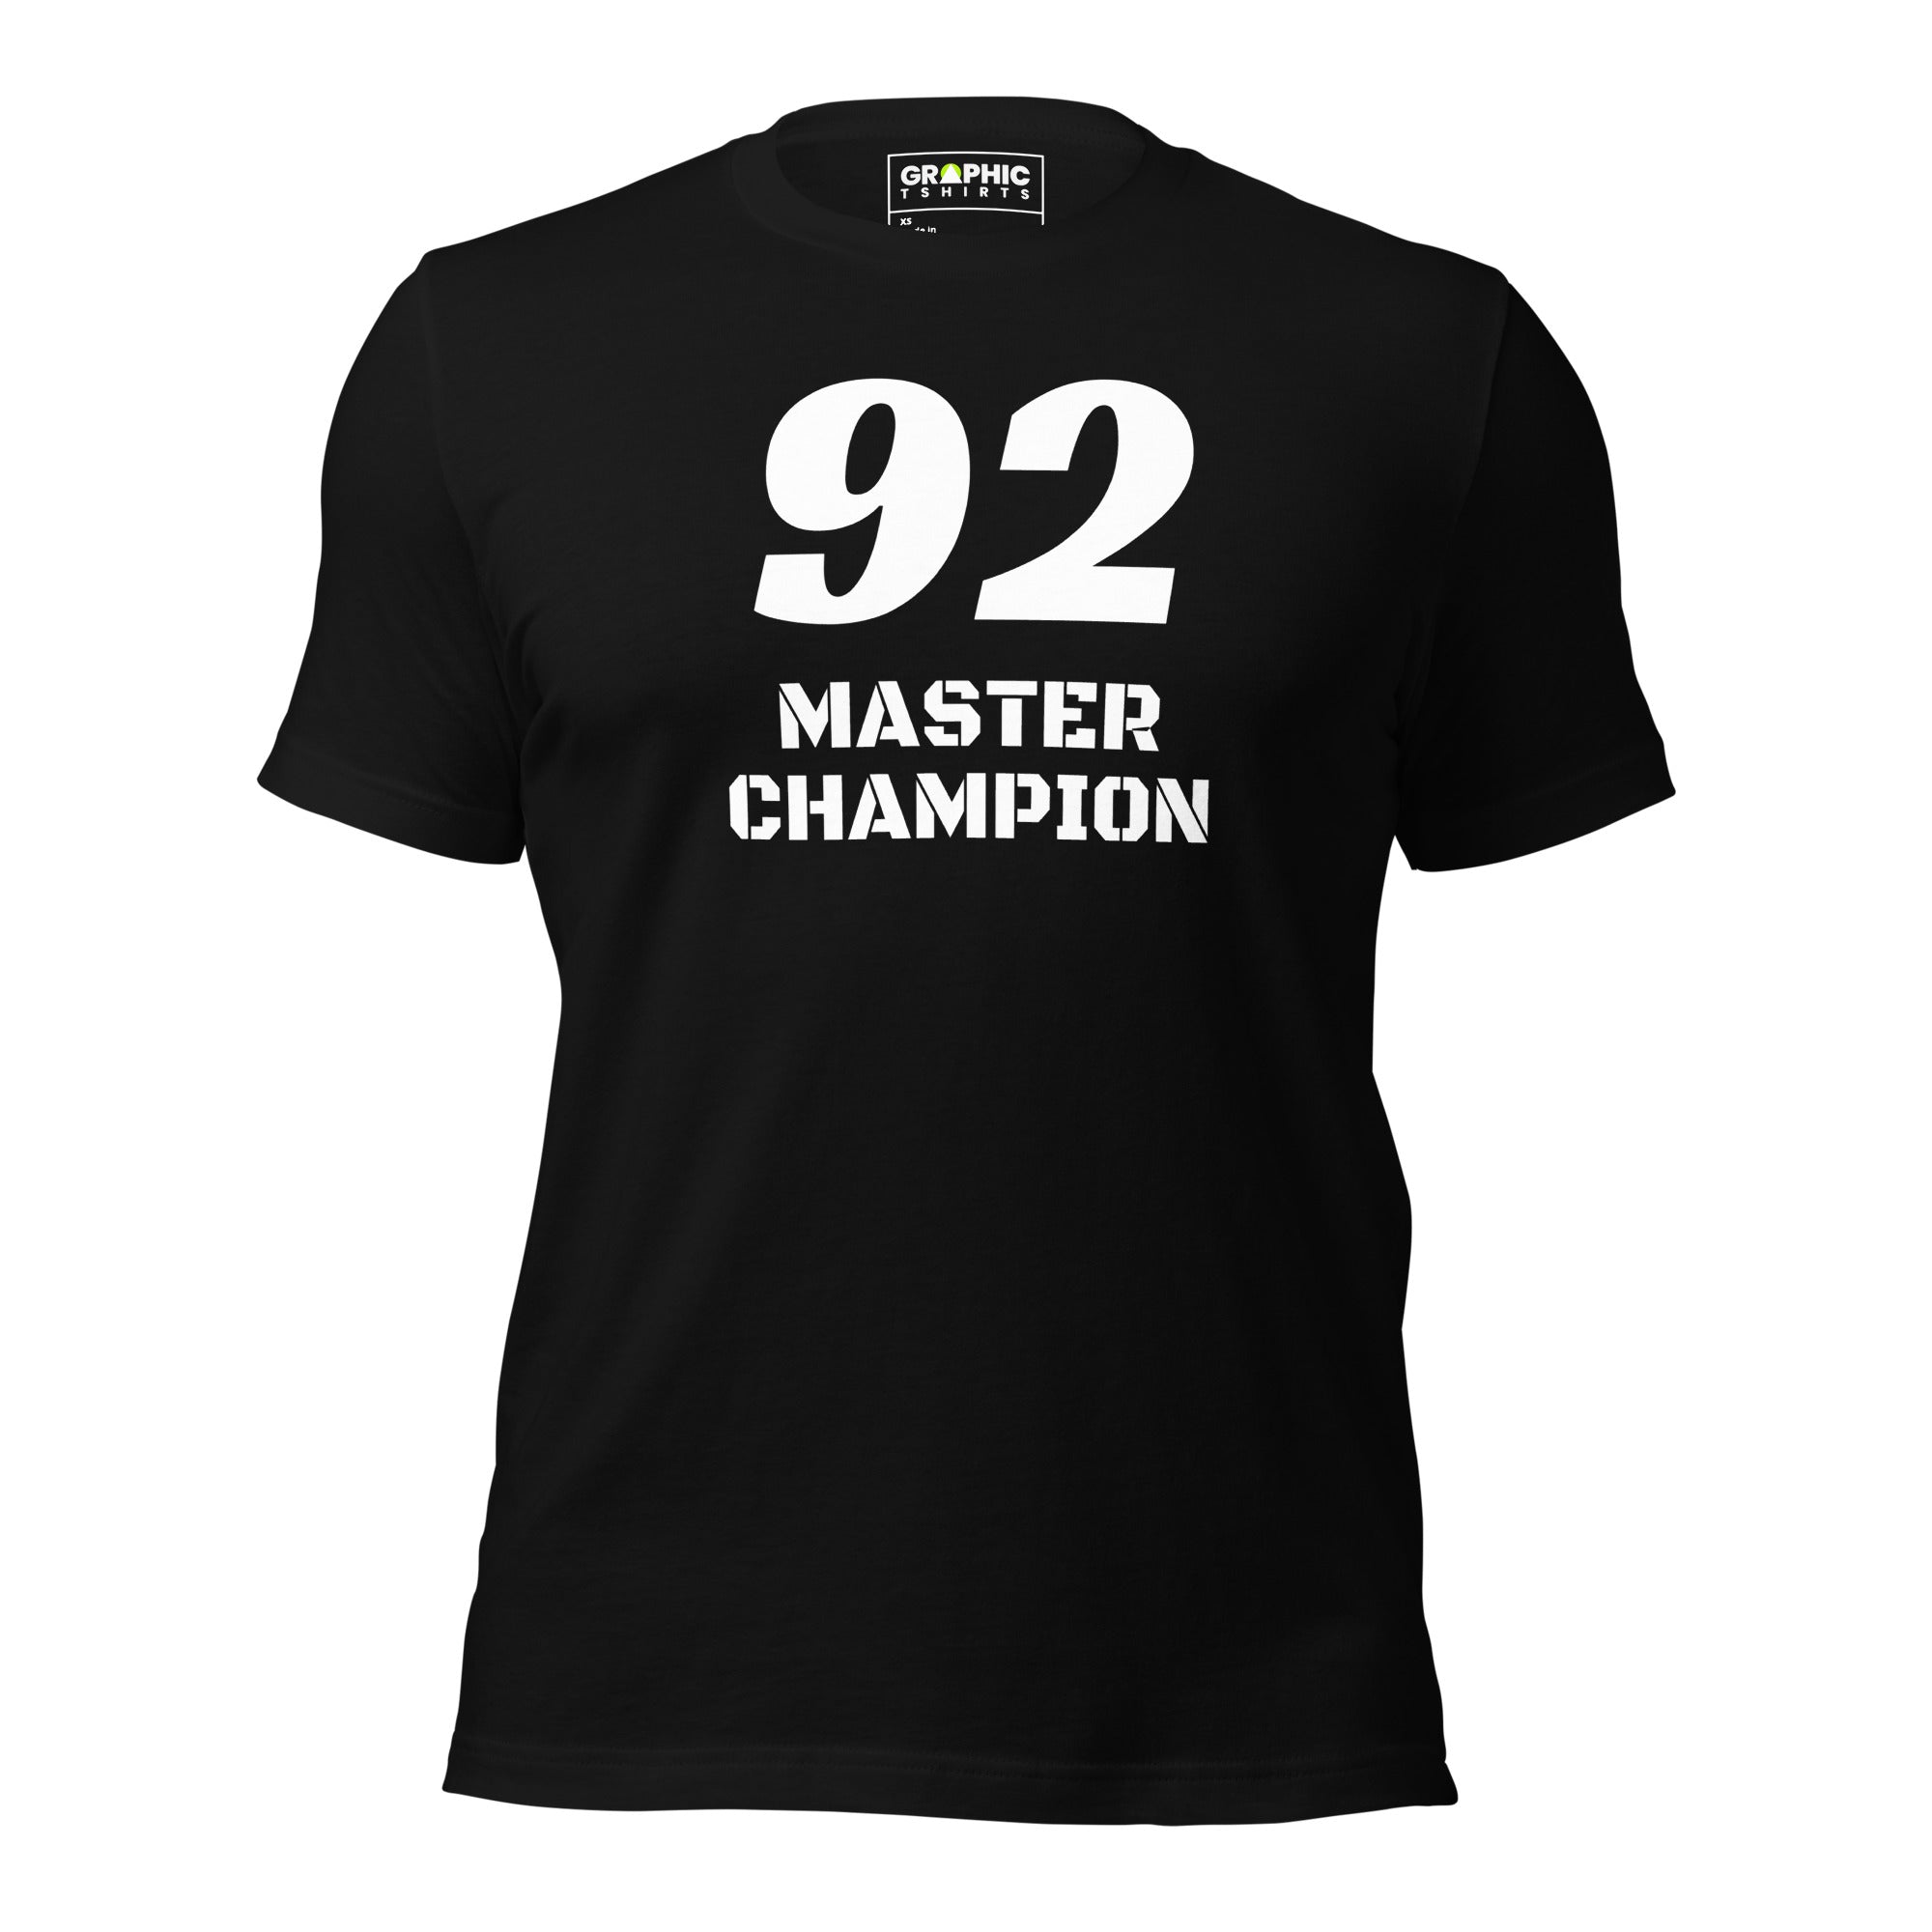 Unisex Crew Neck T-Shirt - 92 Master Champion